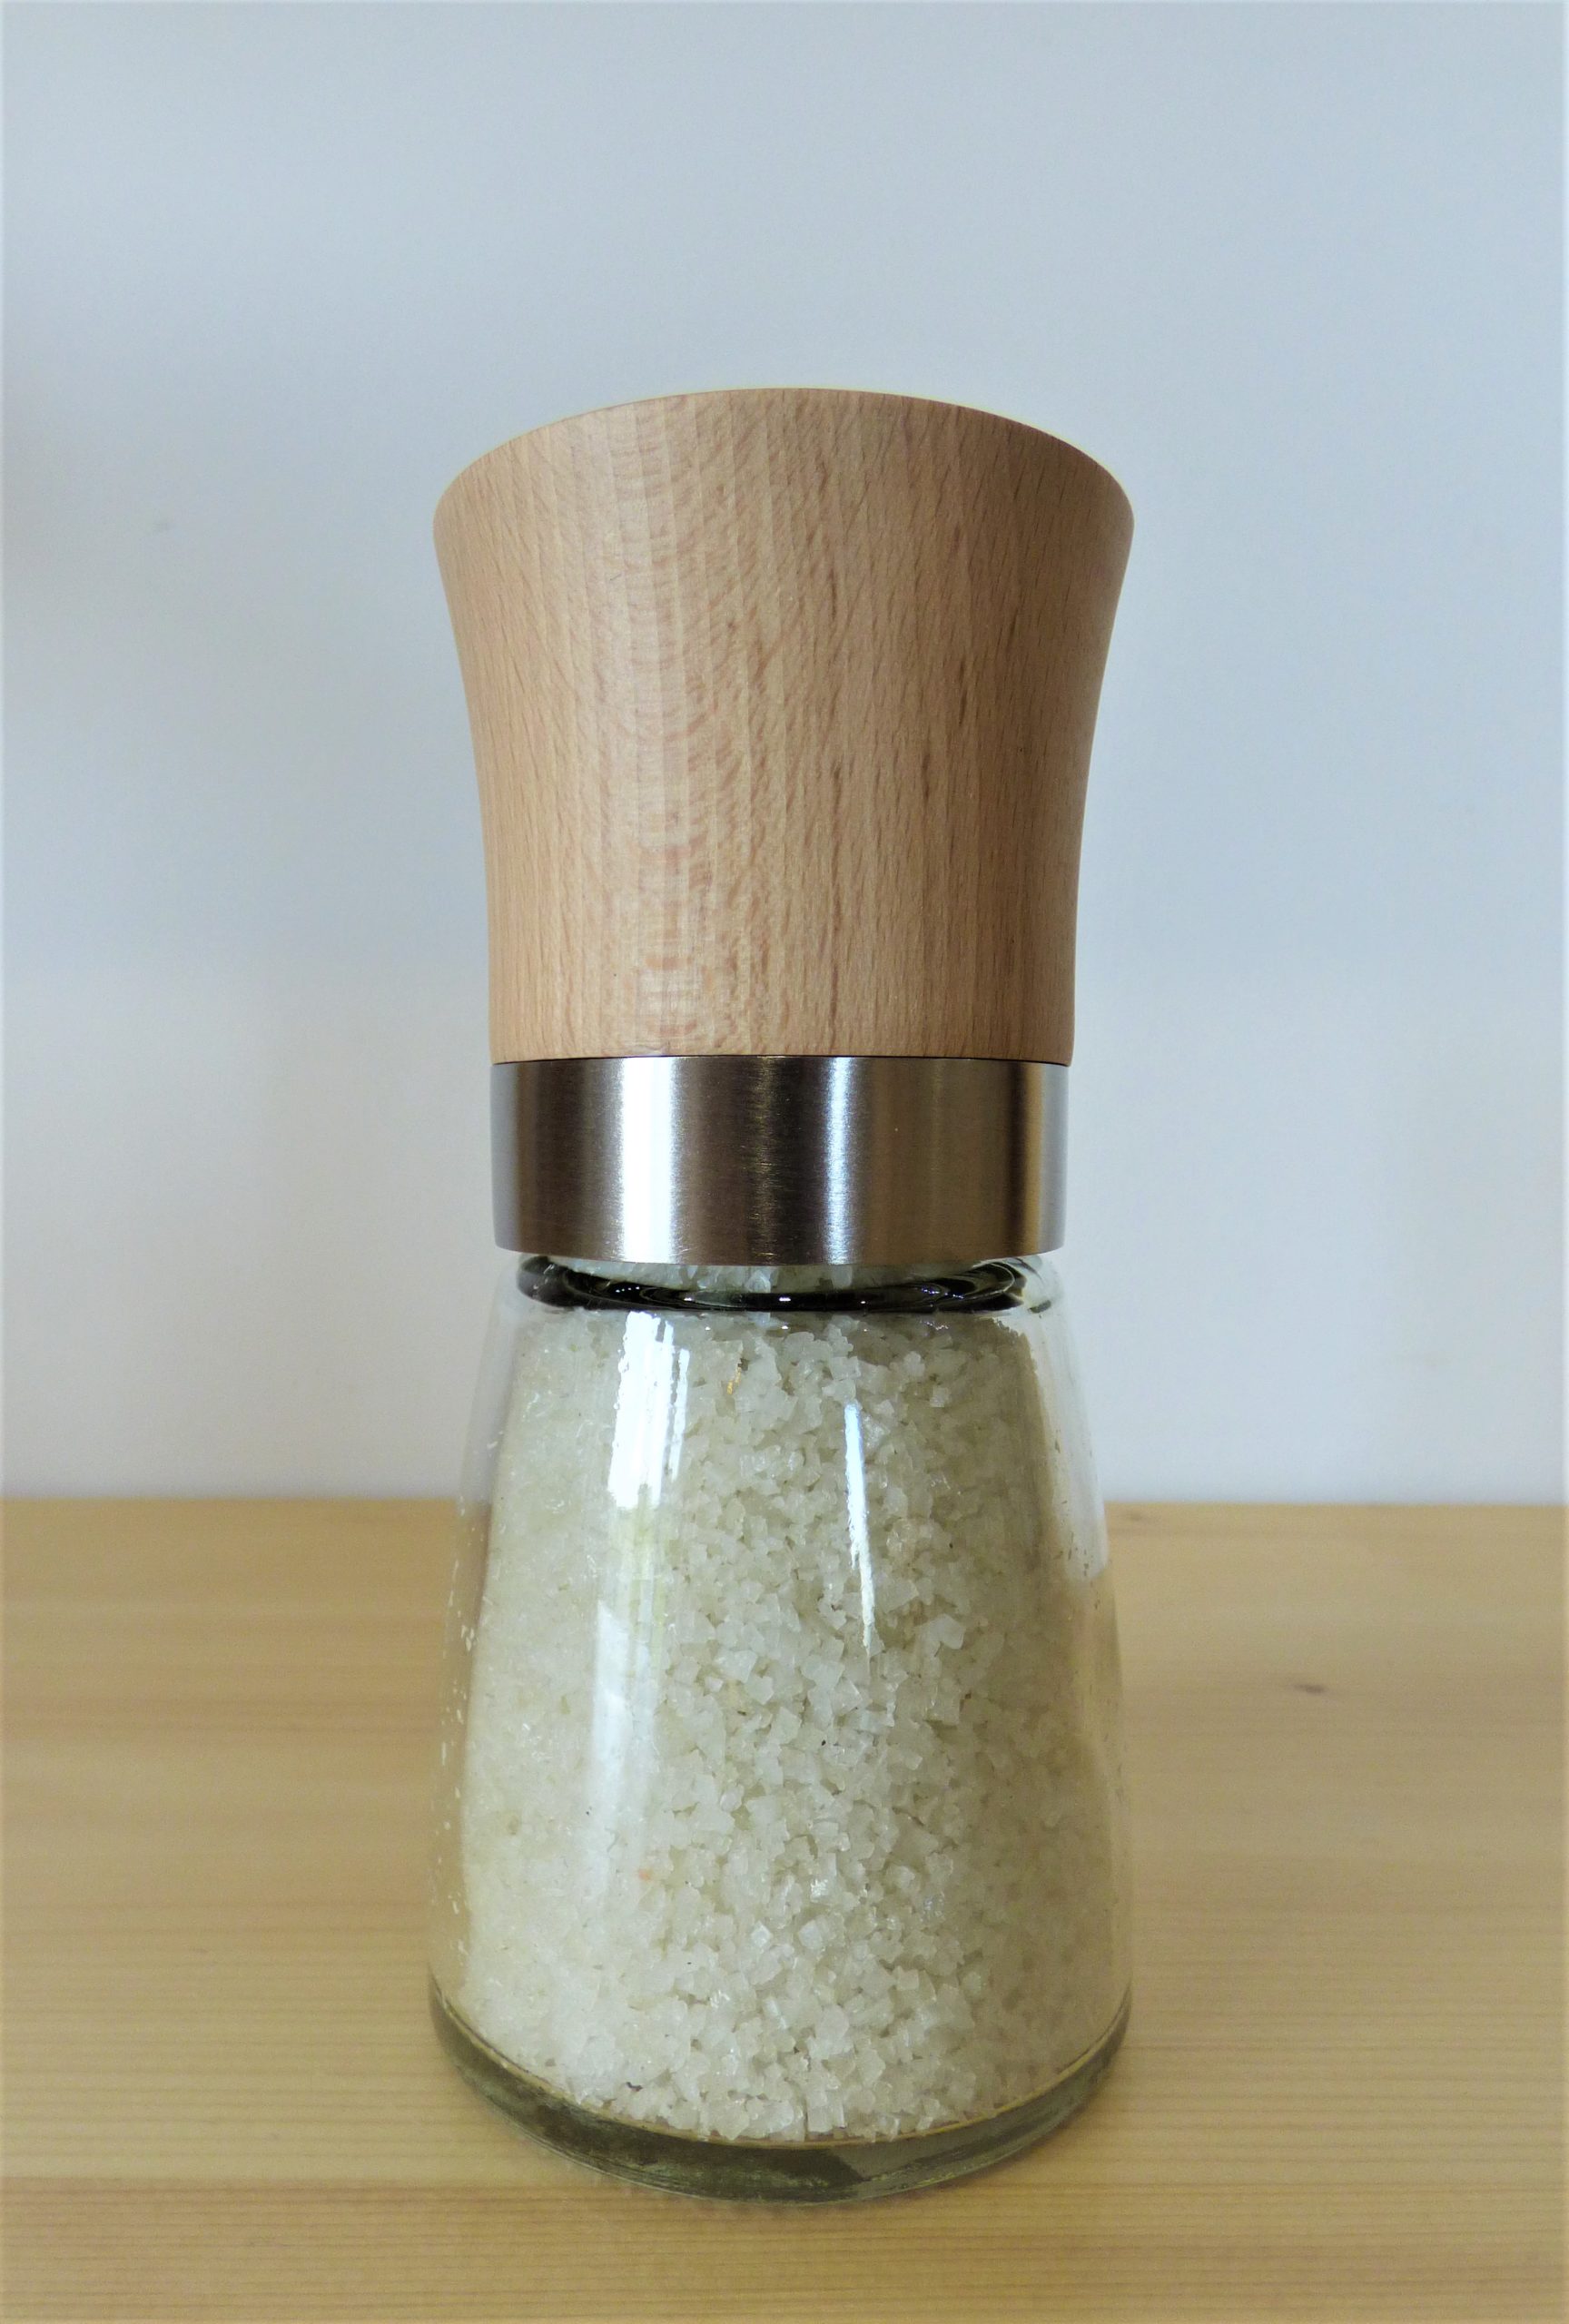 Gros sel au fenouil sauvage Moulin à sel 110 g